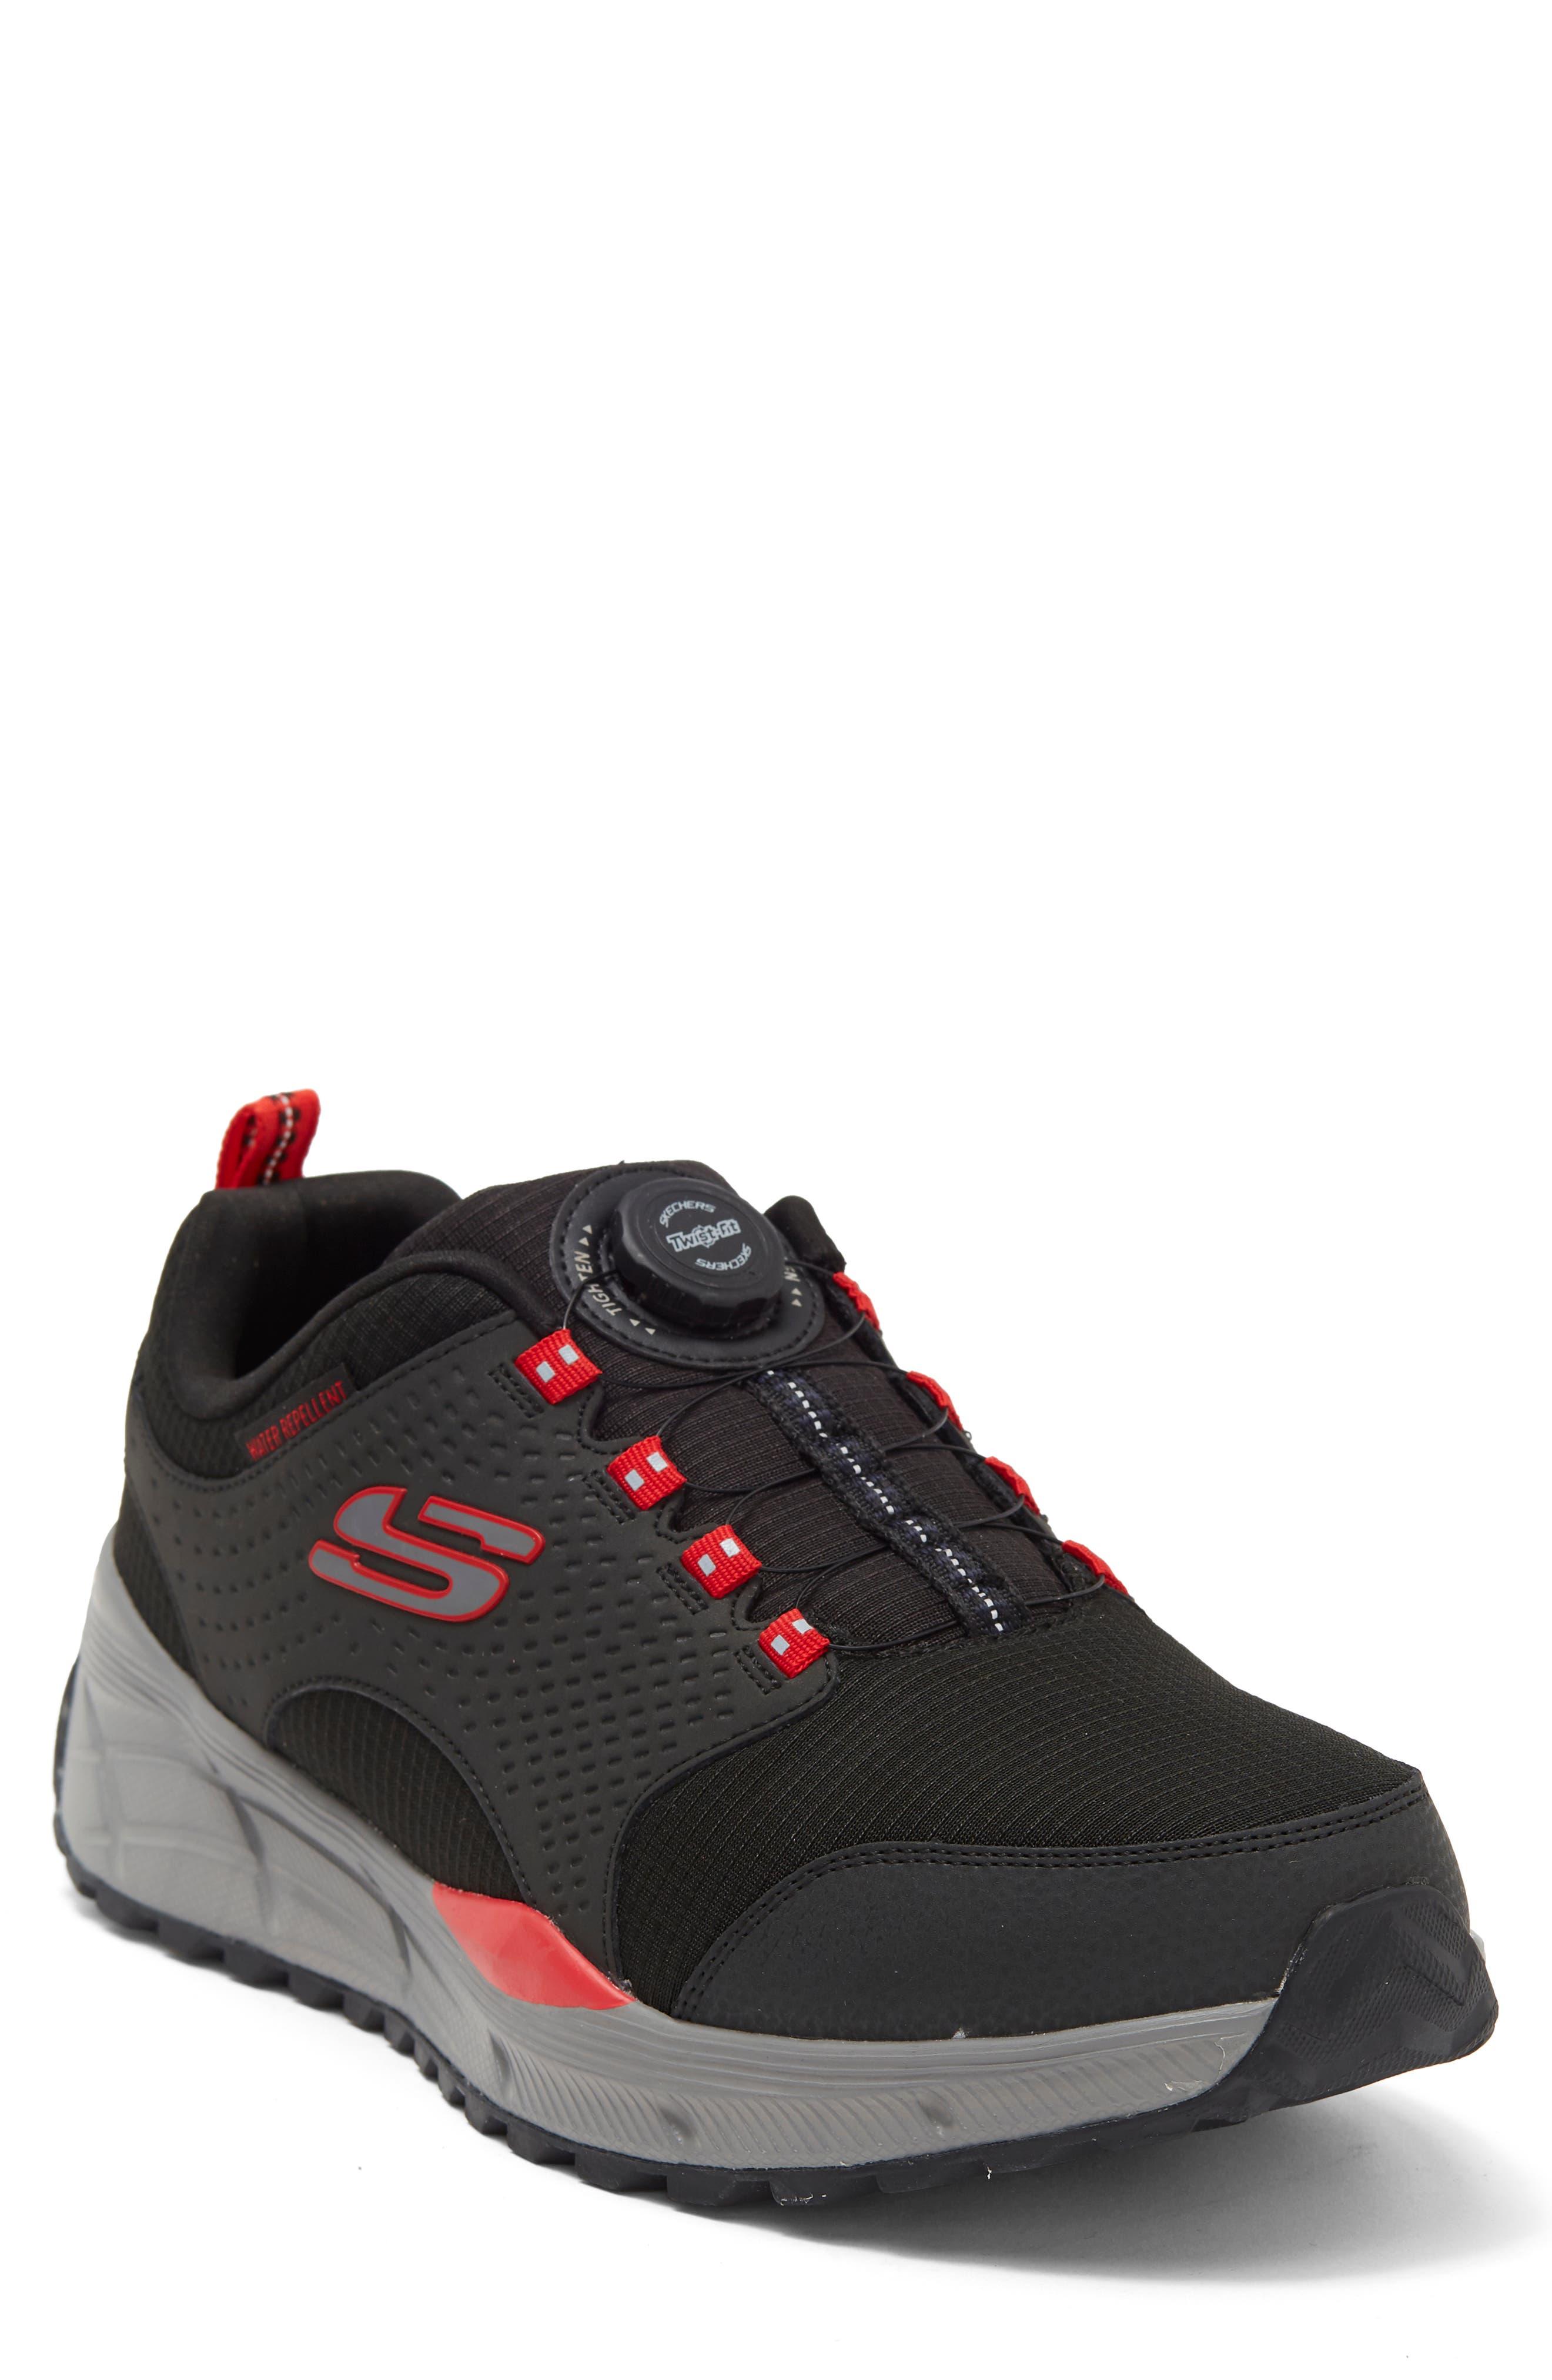 Skechers Twist Fit Walking Sneaker In Black/red At Nordstrom Rack for Men |  Lyst